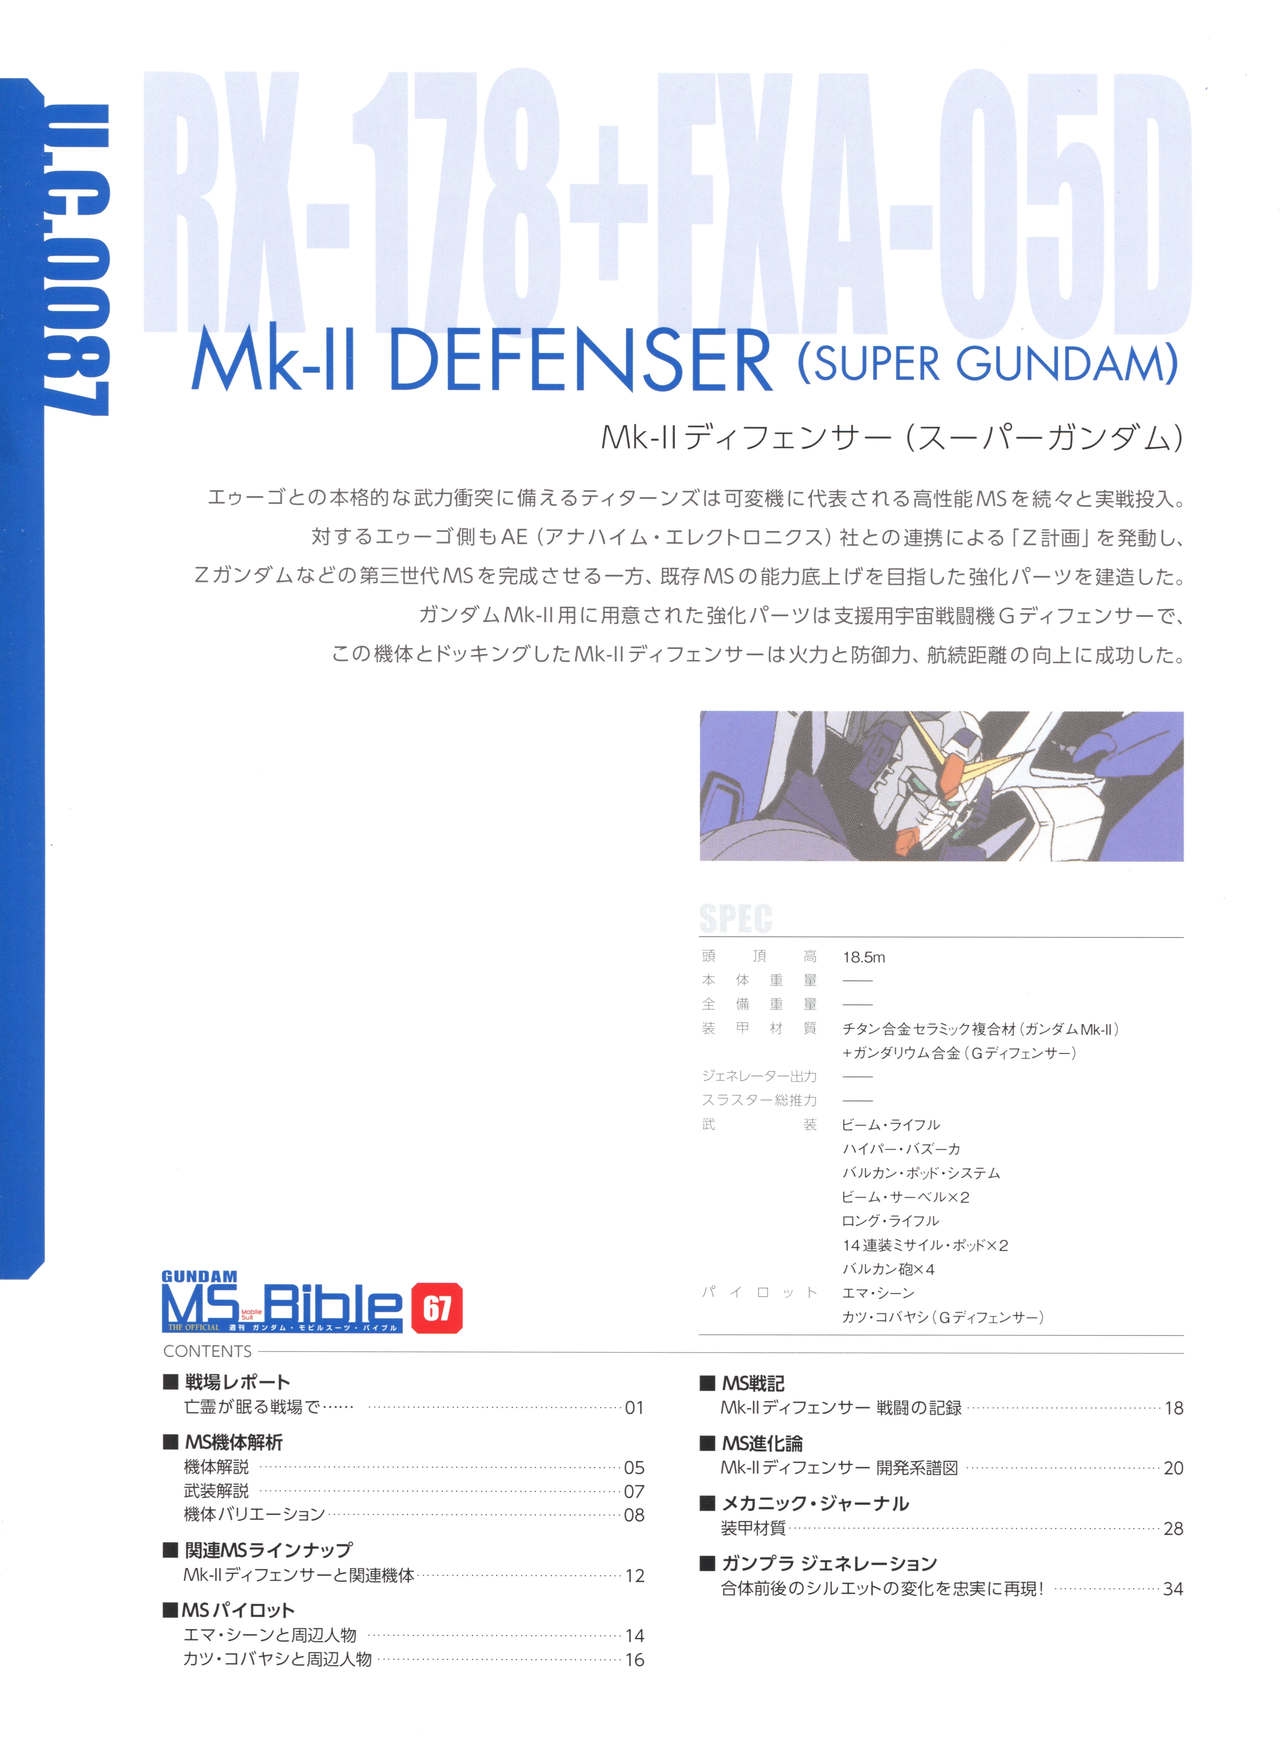 Gundam Mobile Suit Bible 67 2